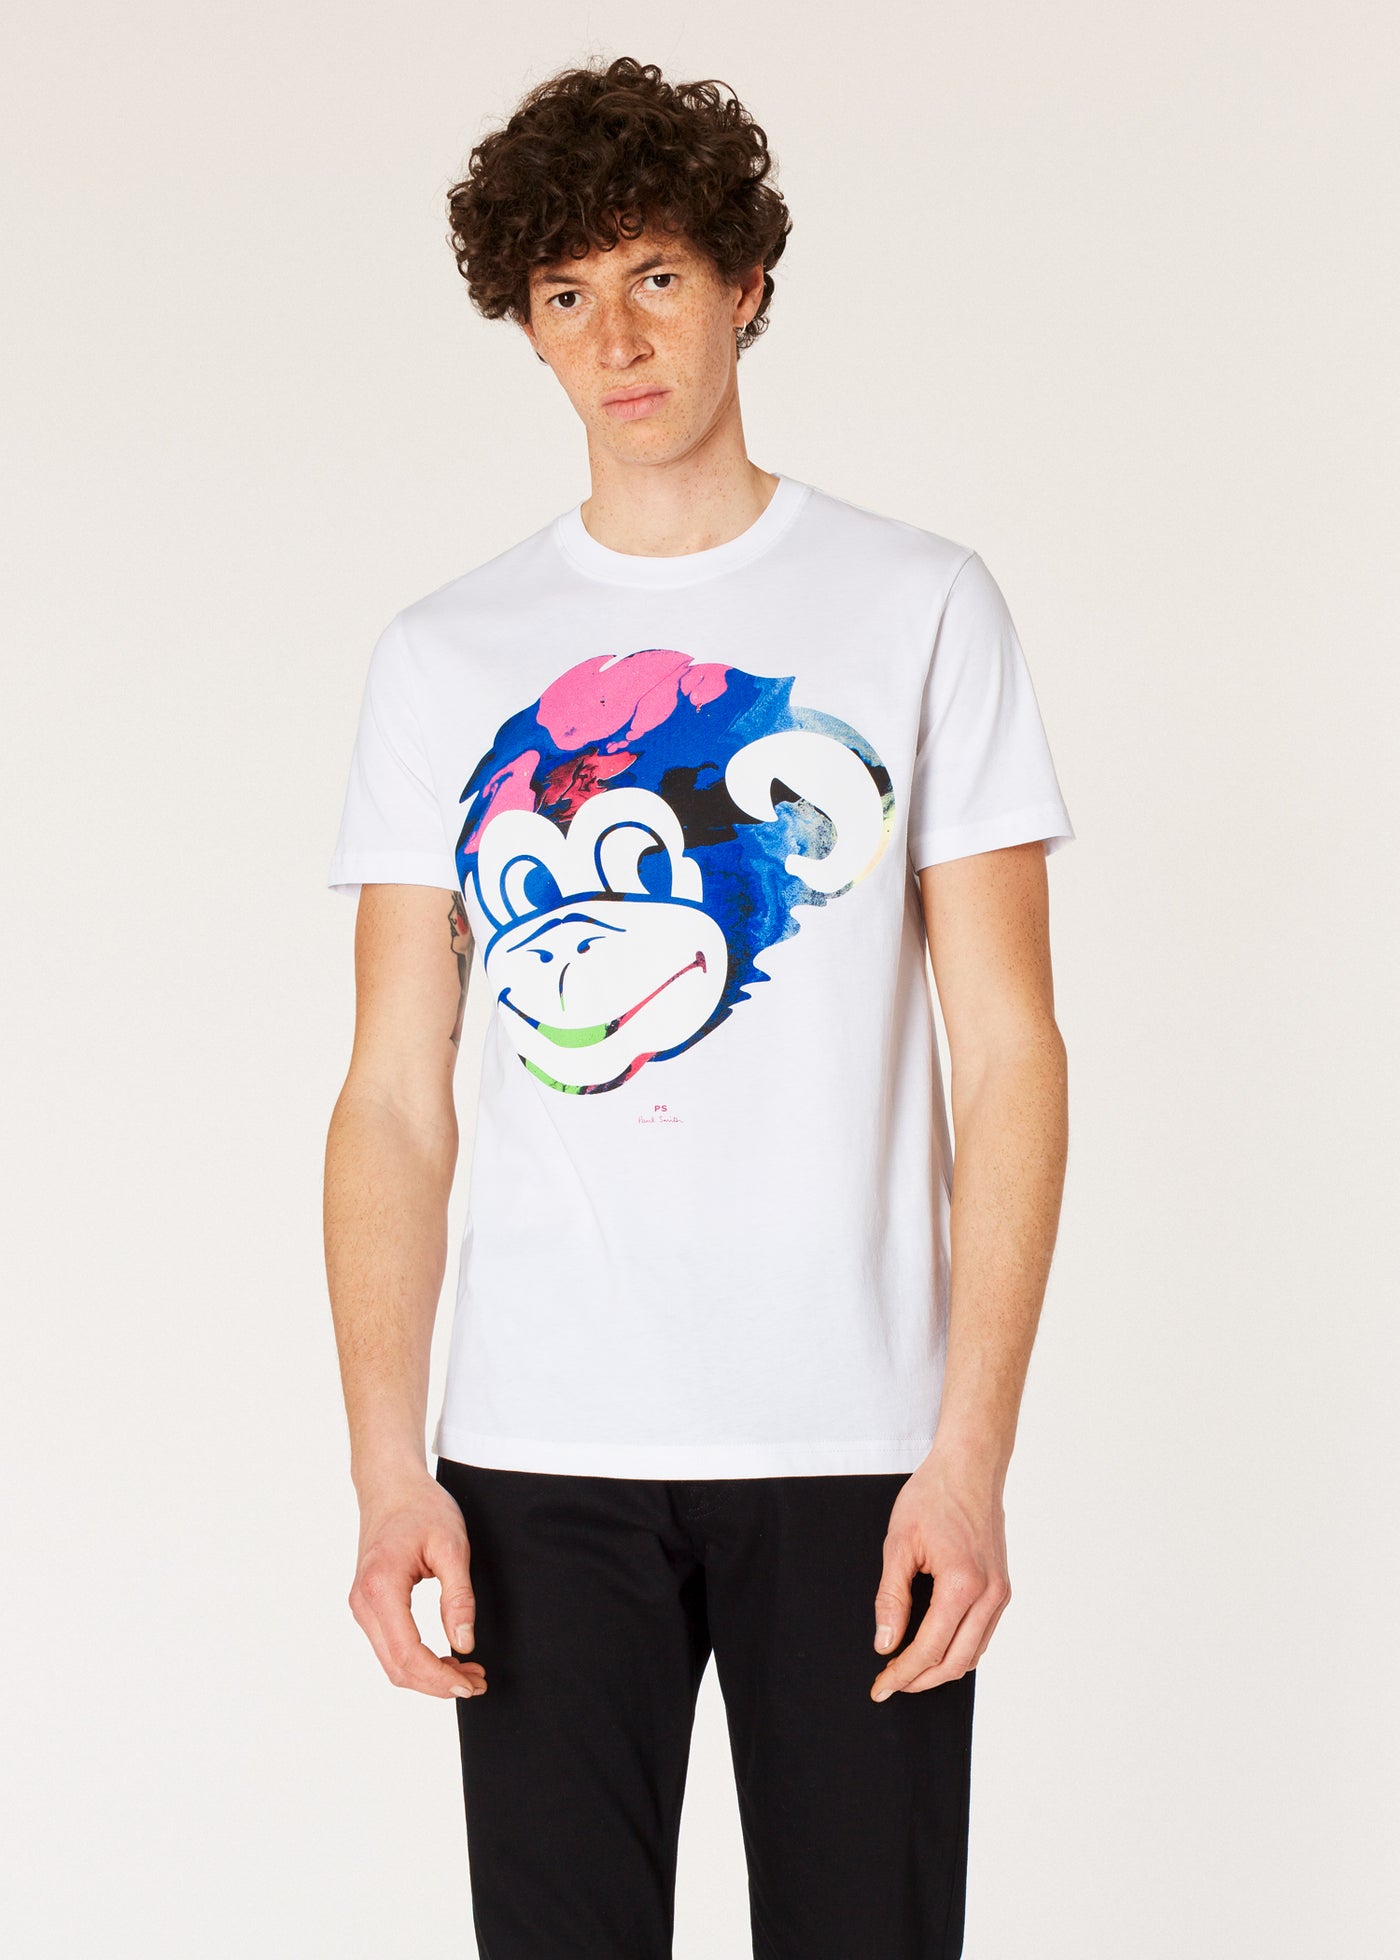 Paul Smith T-shirt Κανονική Εφαρμογή | Λευκό